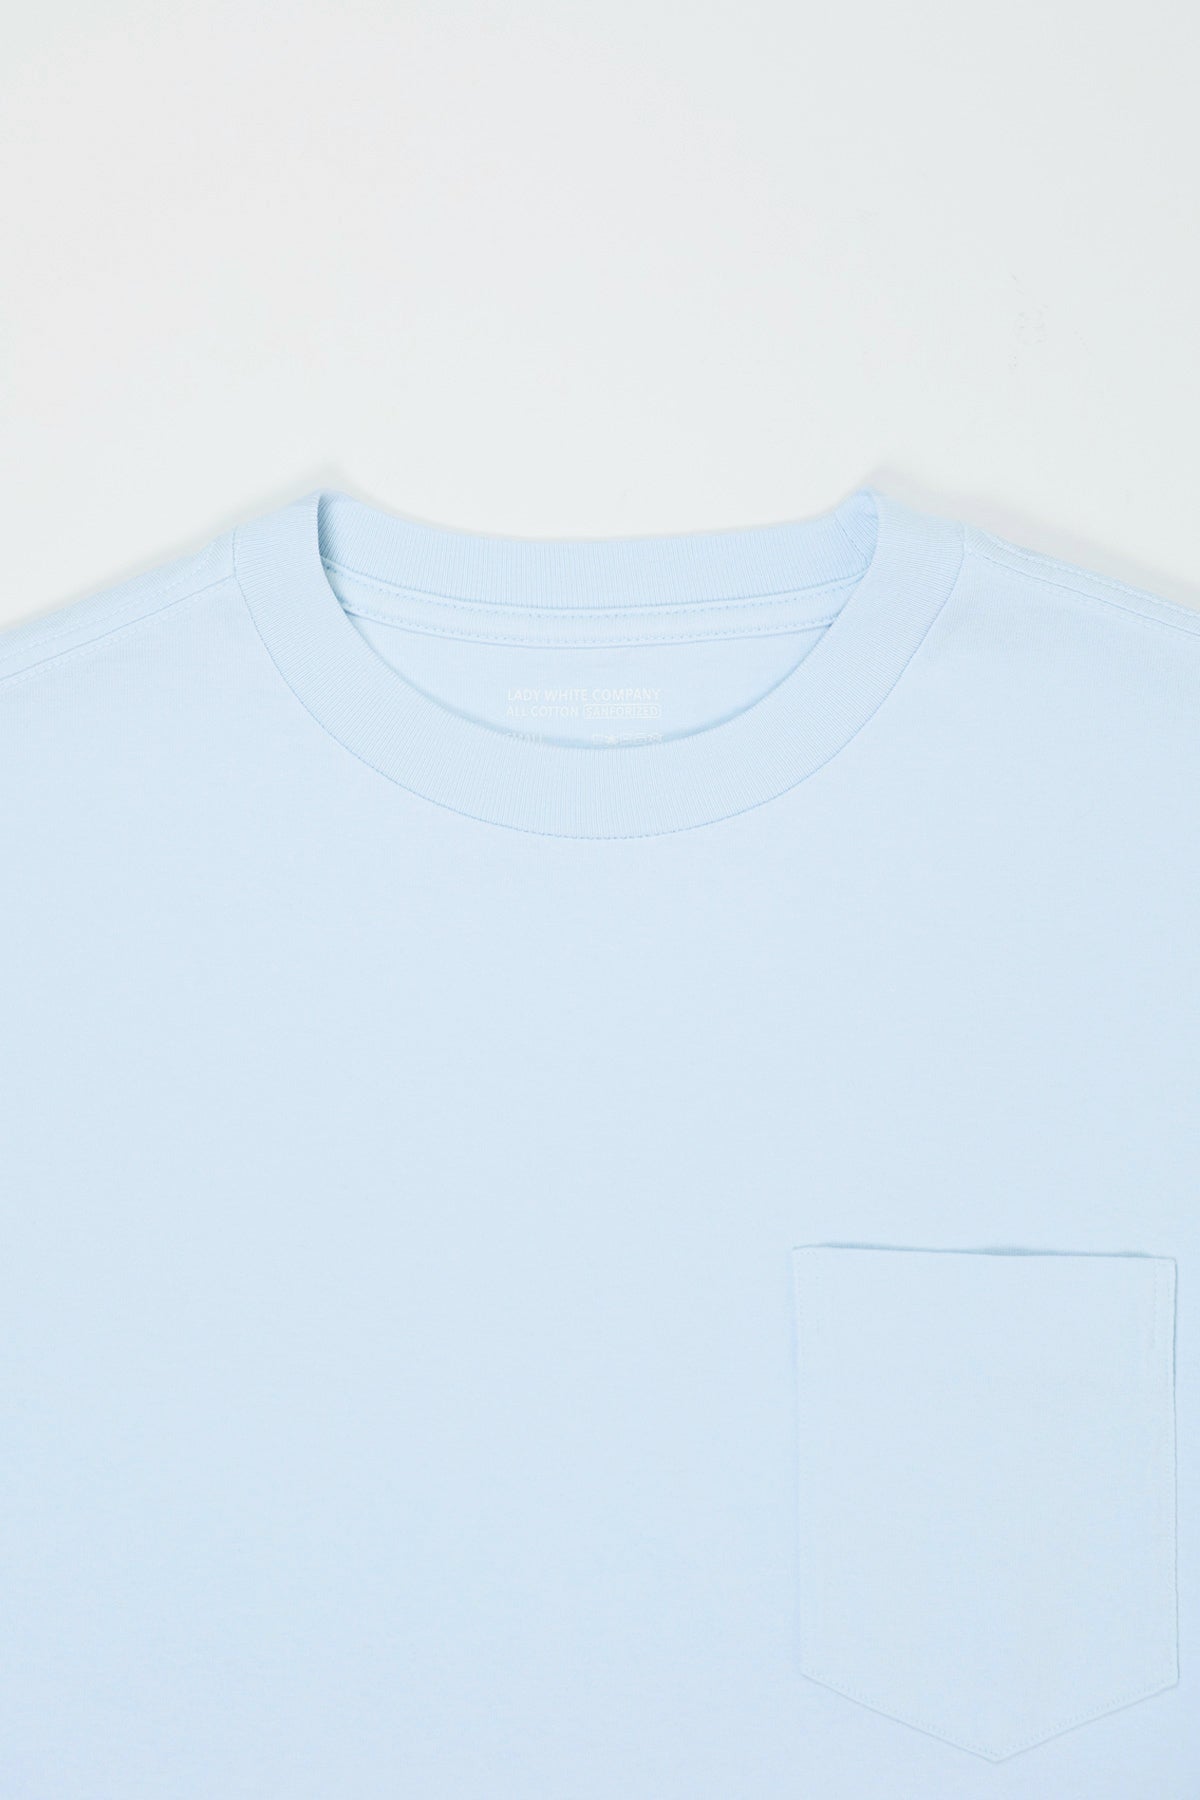 Lady White Co. BALTA Pocket T-Shirt - Black S